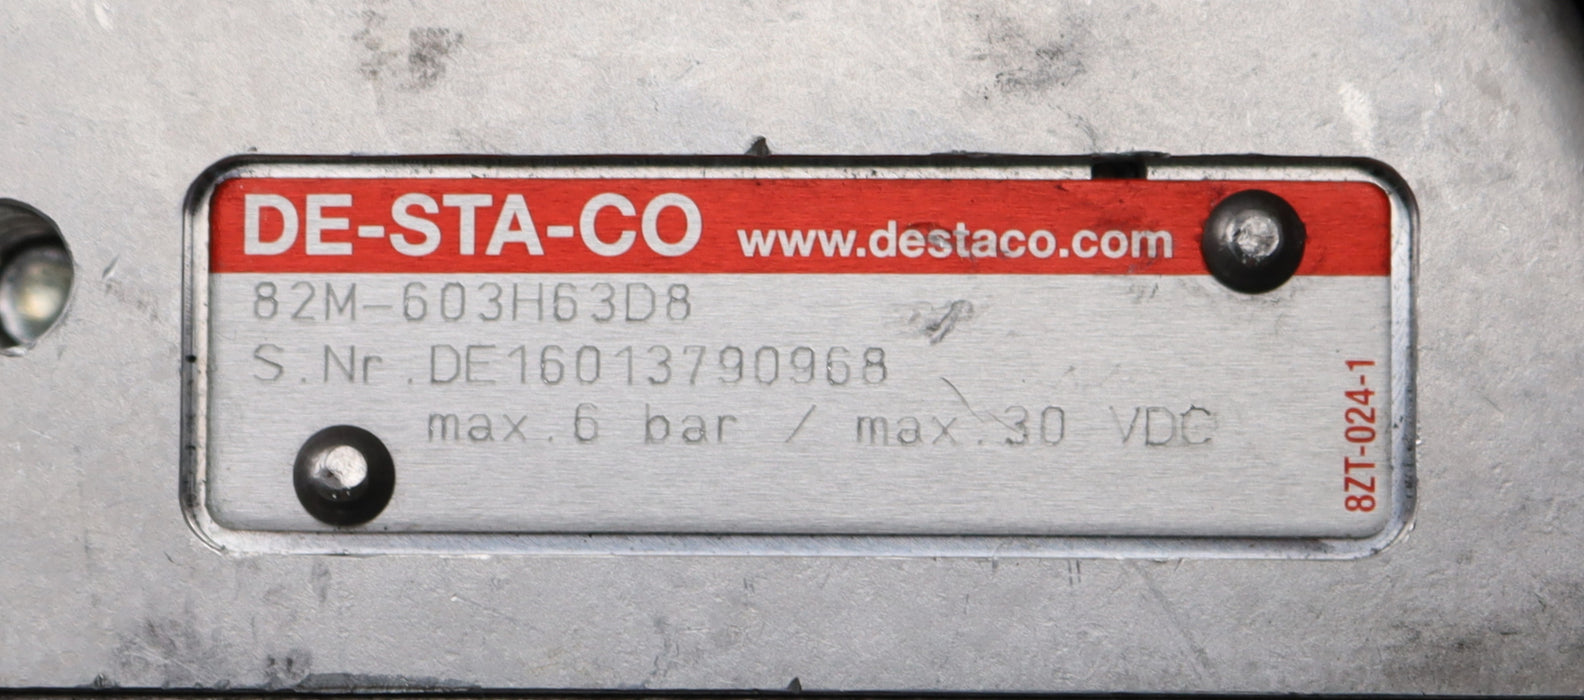 Bild des Artikels DESTACO-Automations-Kraftspanner-82M-603H63D8-Haltemoment-1000Nm